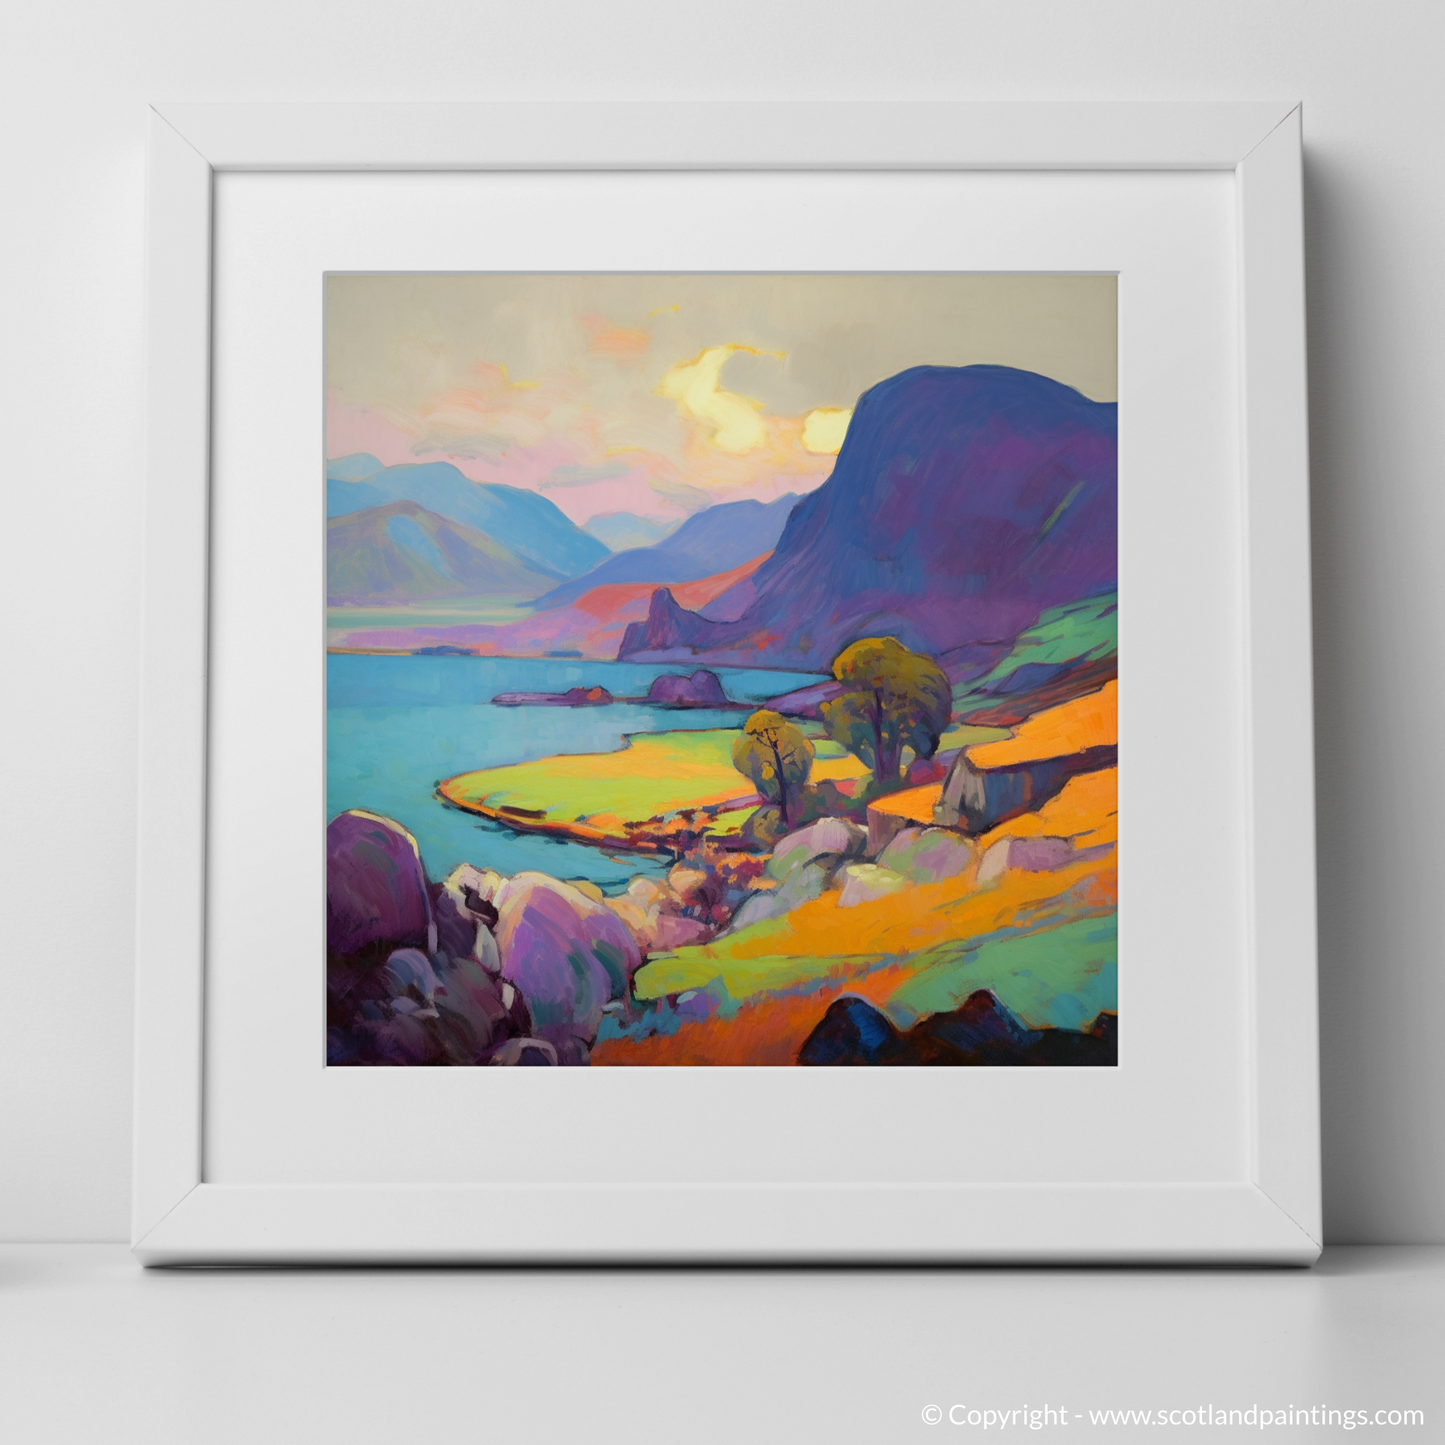 Isle of Skye Enchantment: An Impressionist Journey through Scottish Isles